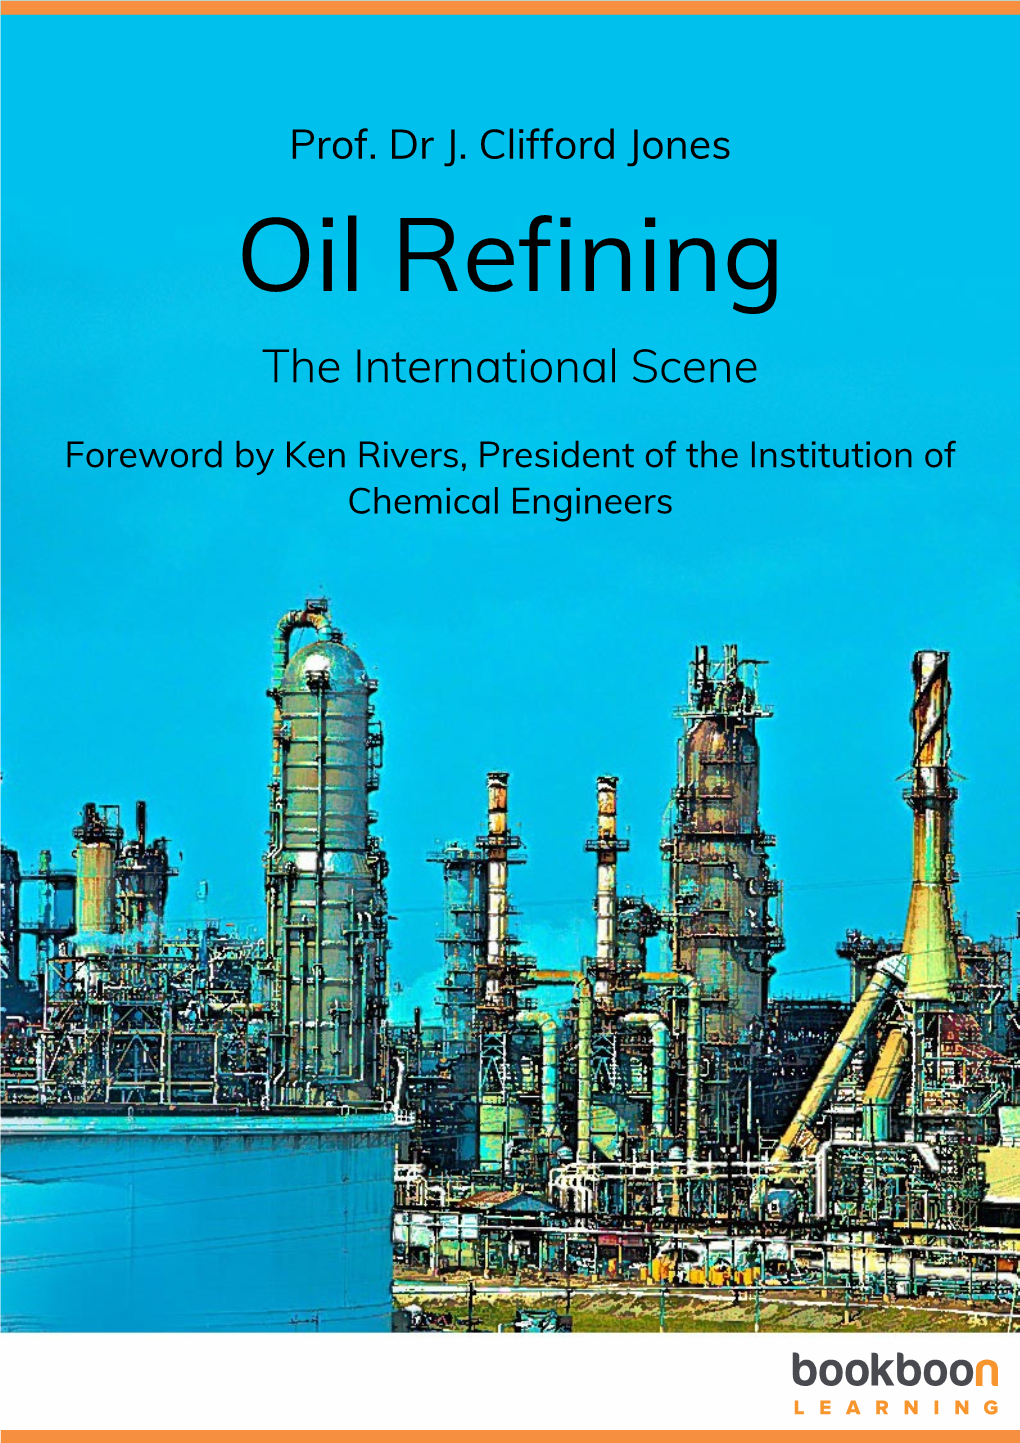 Prof. Dr. J. Clifford Jones Oil Refining: the International Scene